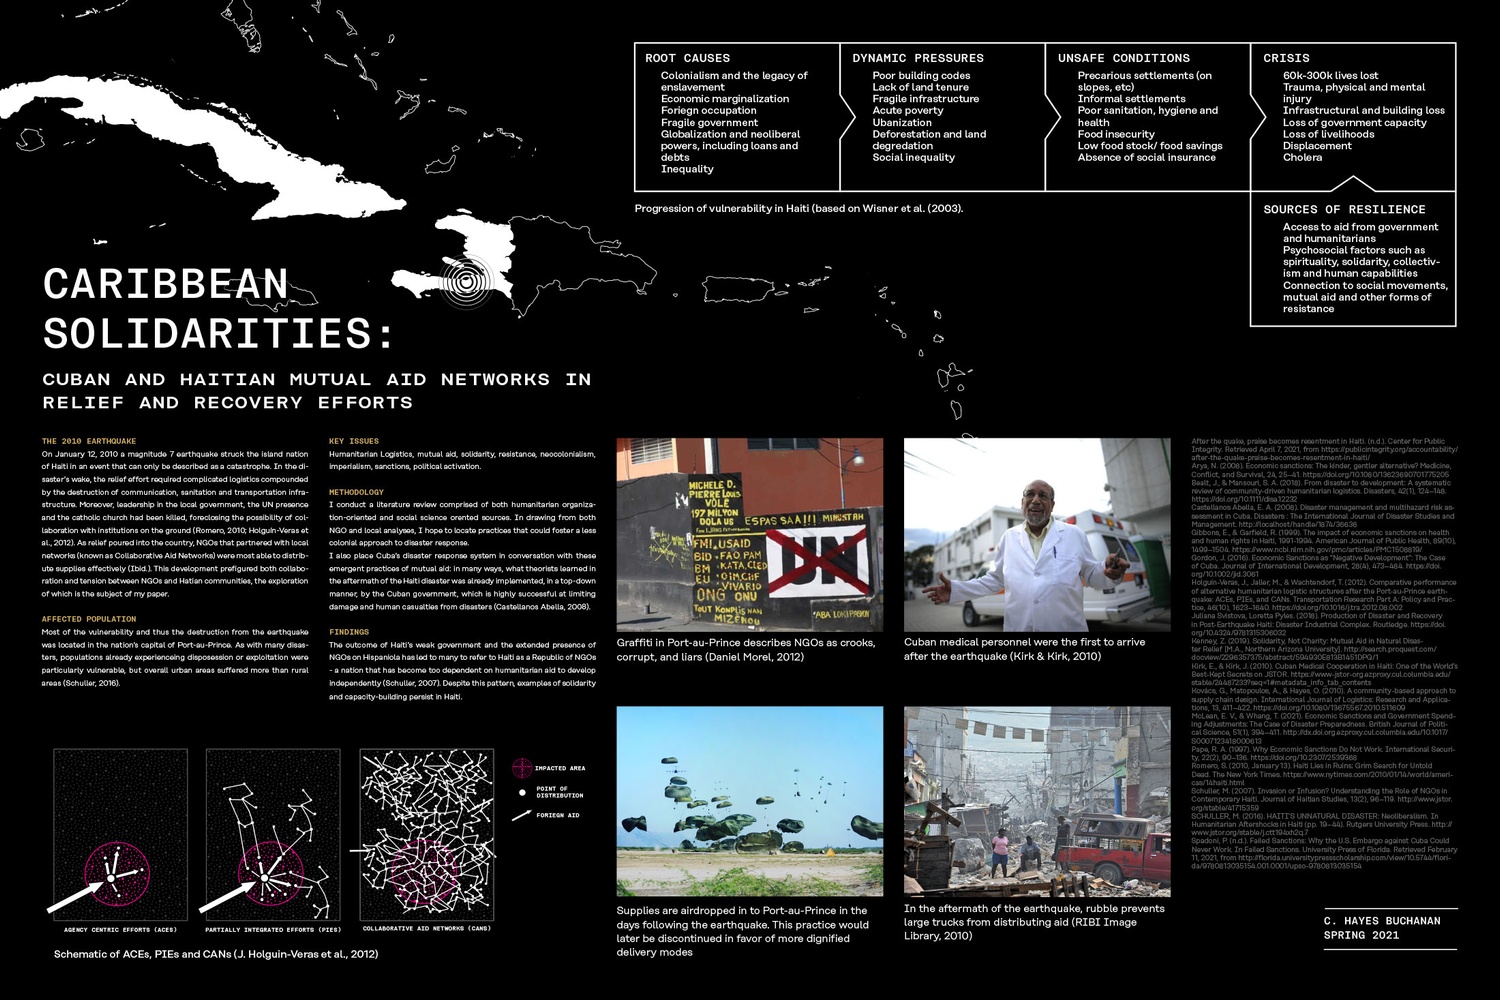 phd urban planning columbia